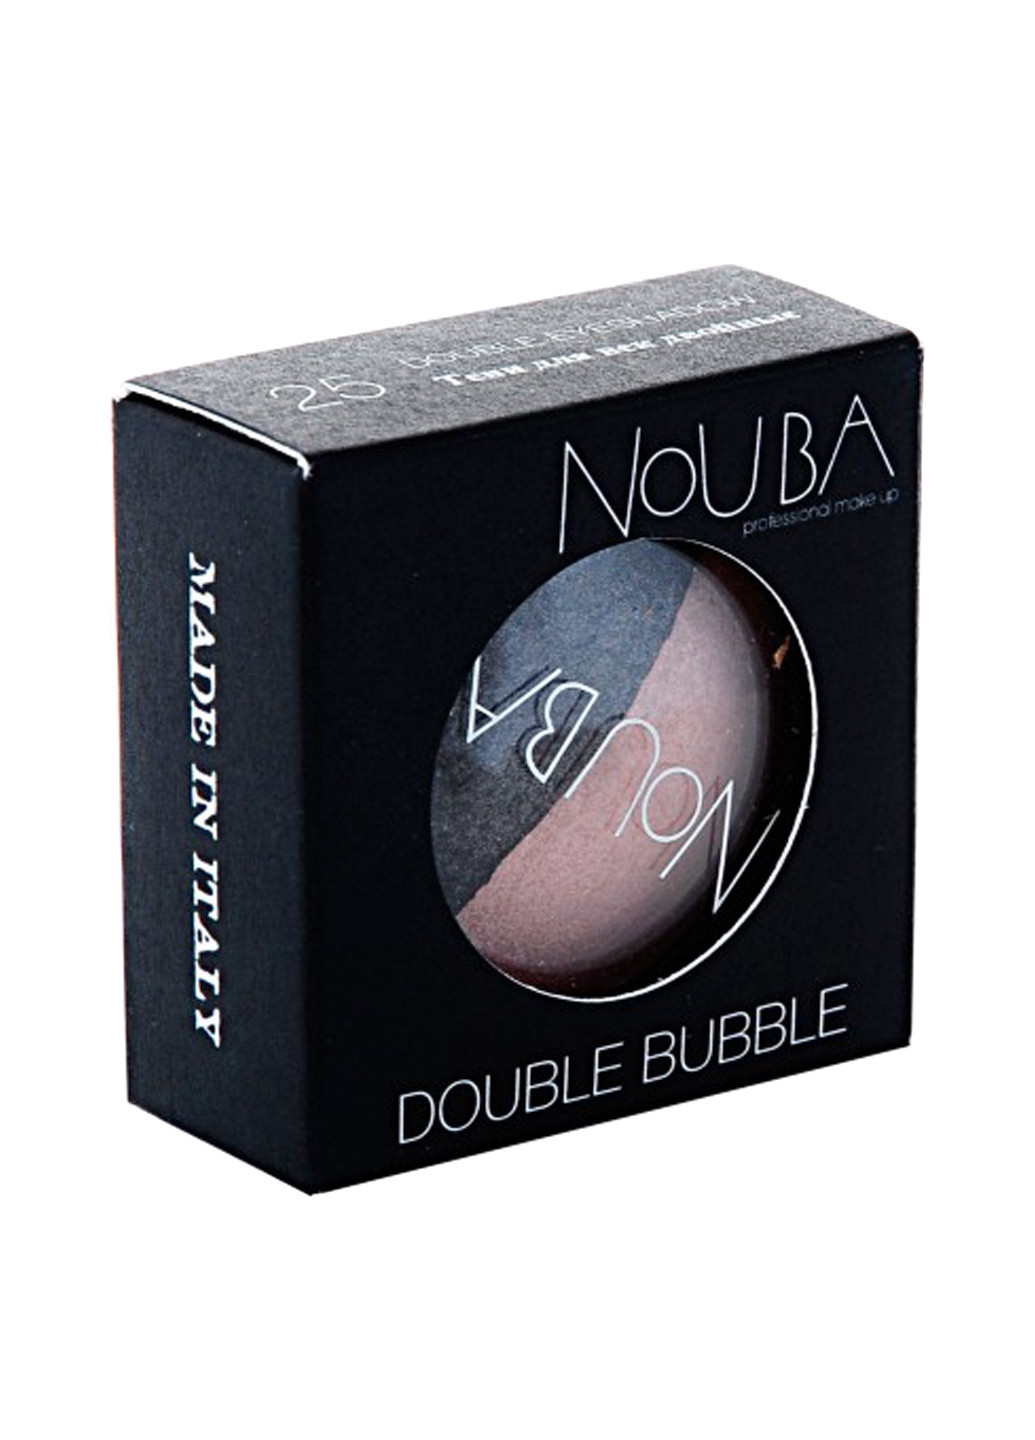 Тени для век двойные DUBBLE BUBBLE №25, 2 г (тестер) NoUBA (17054495)